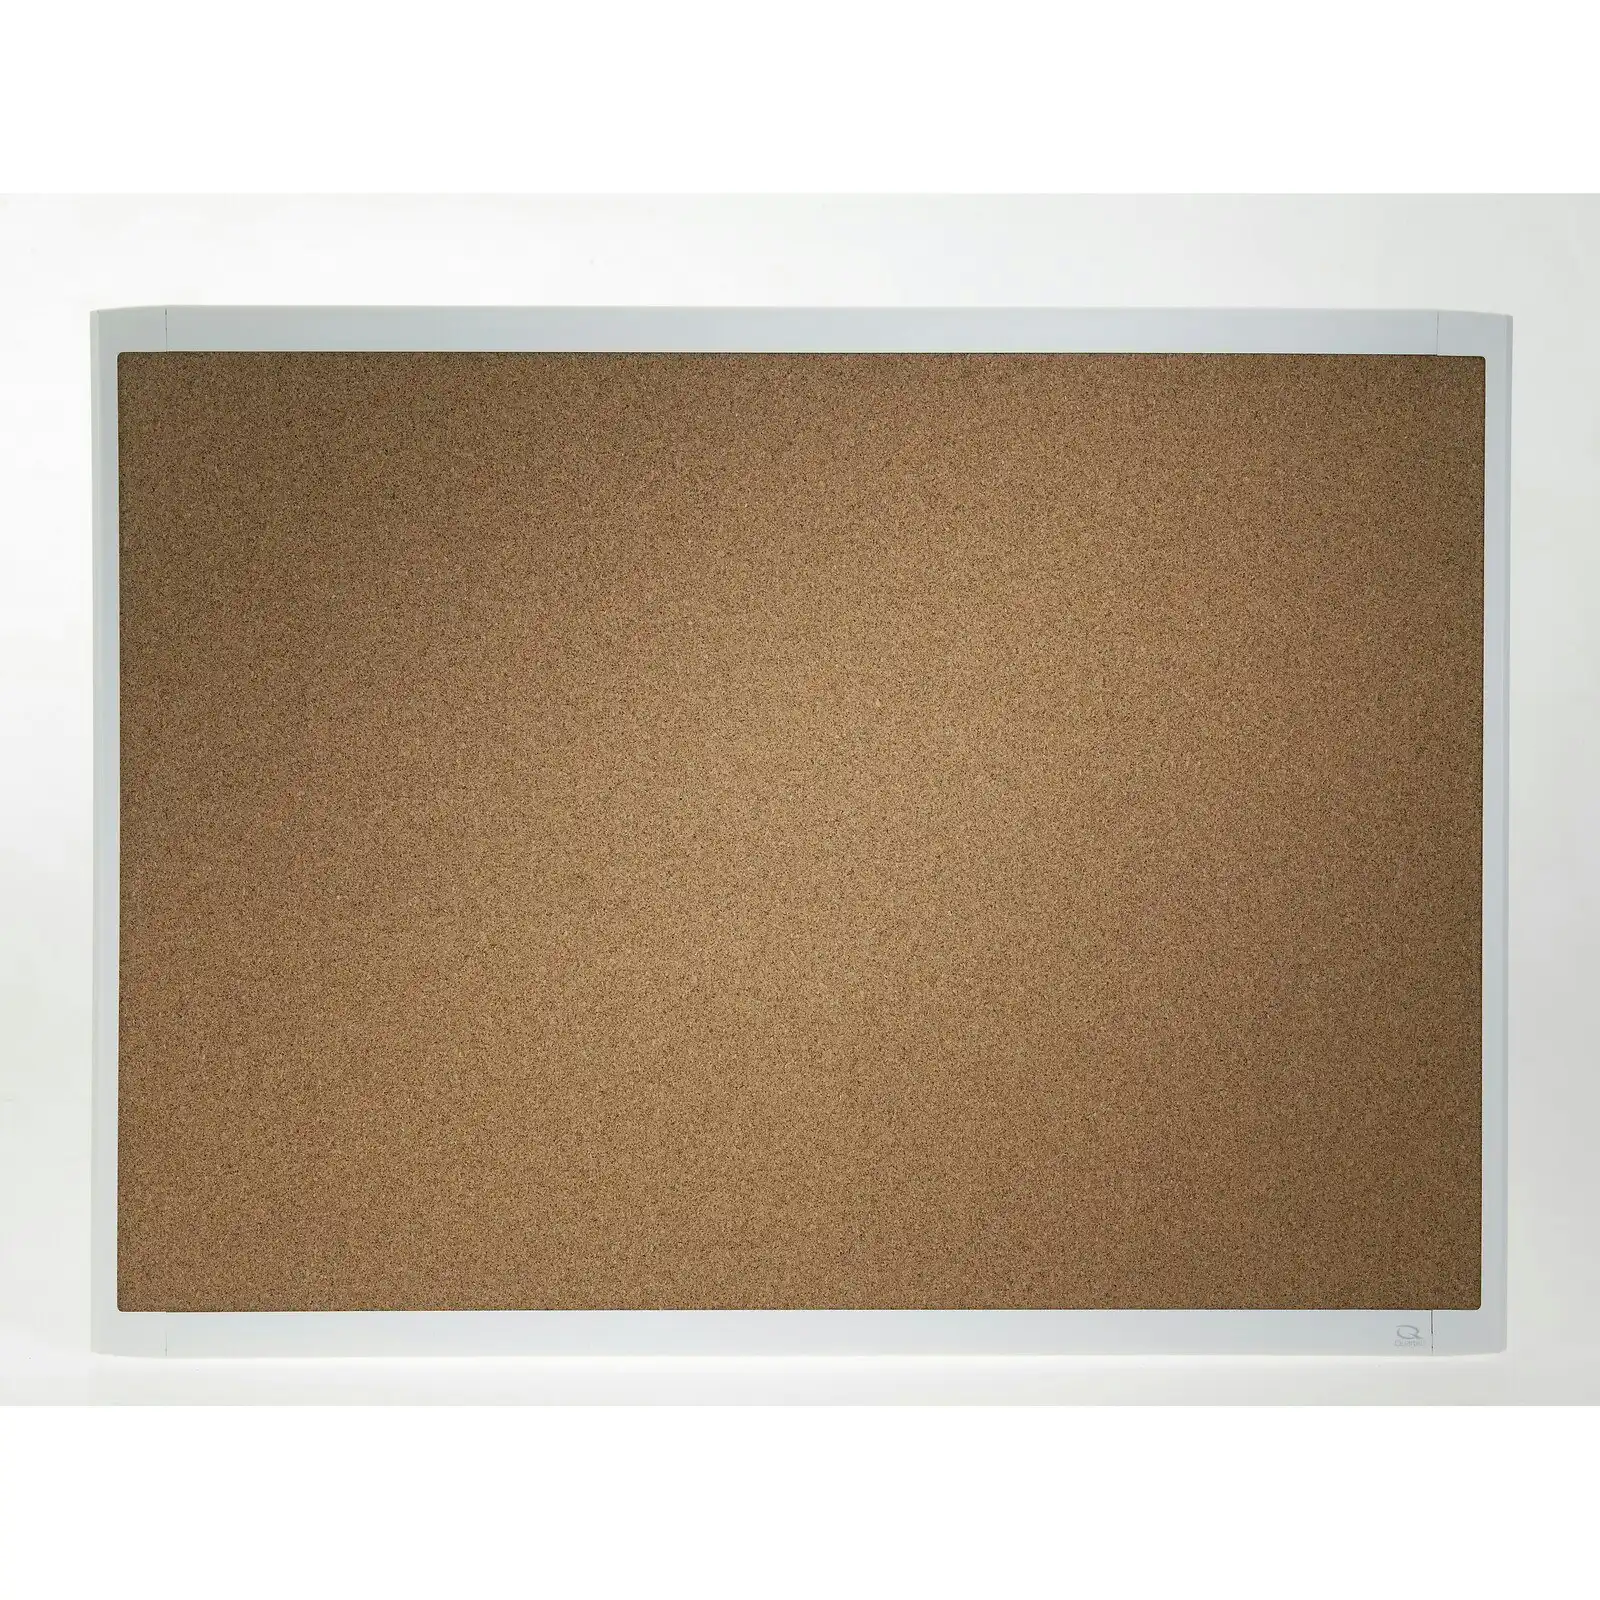 Quartet Basics 43x58cm Corkboard Wall Hanging Bulletin Pin Board w/ White Frame